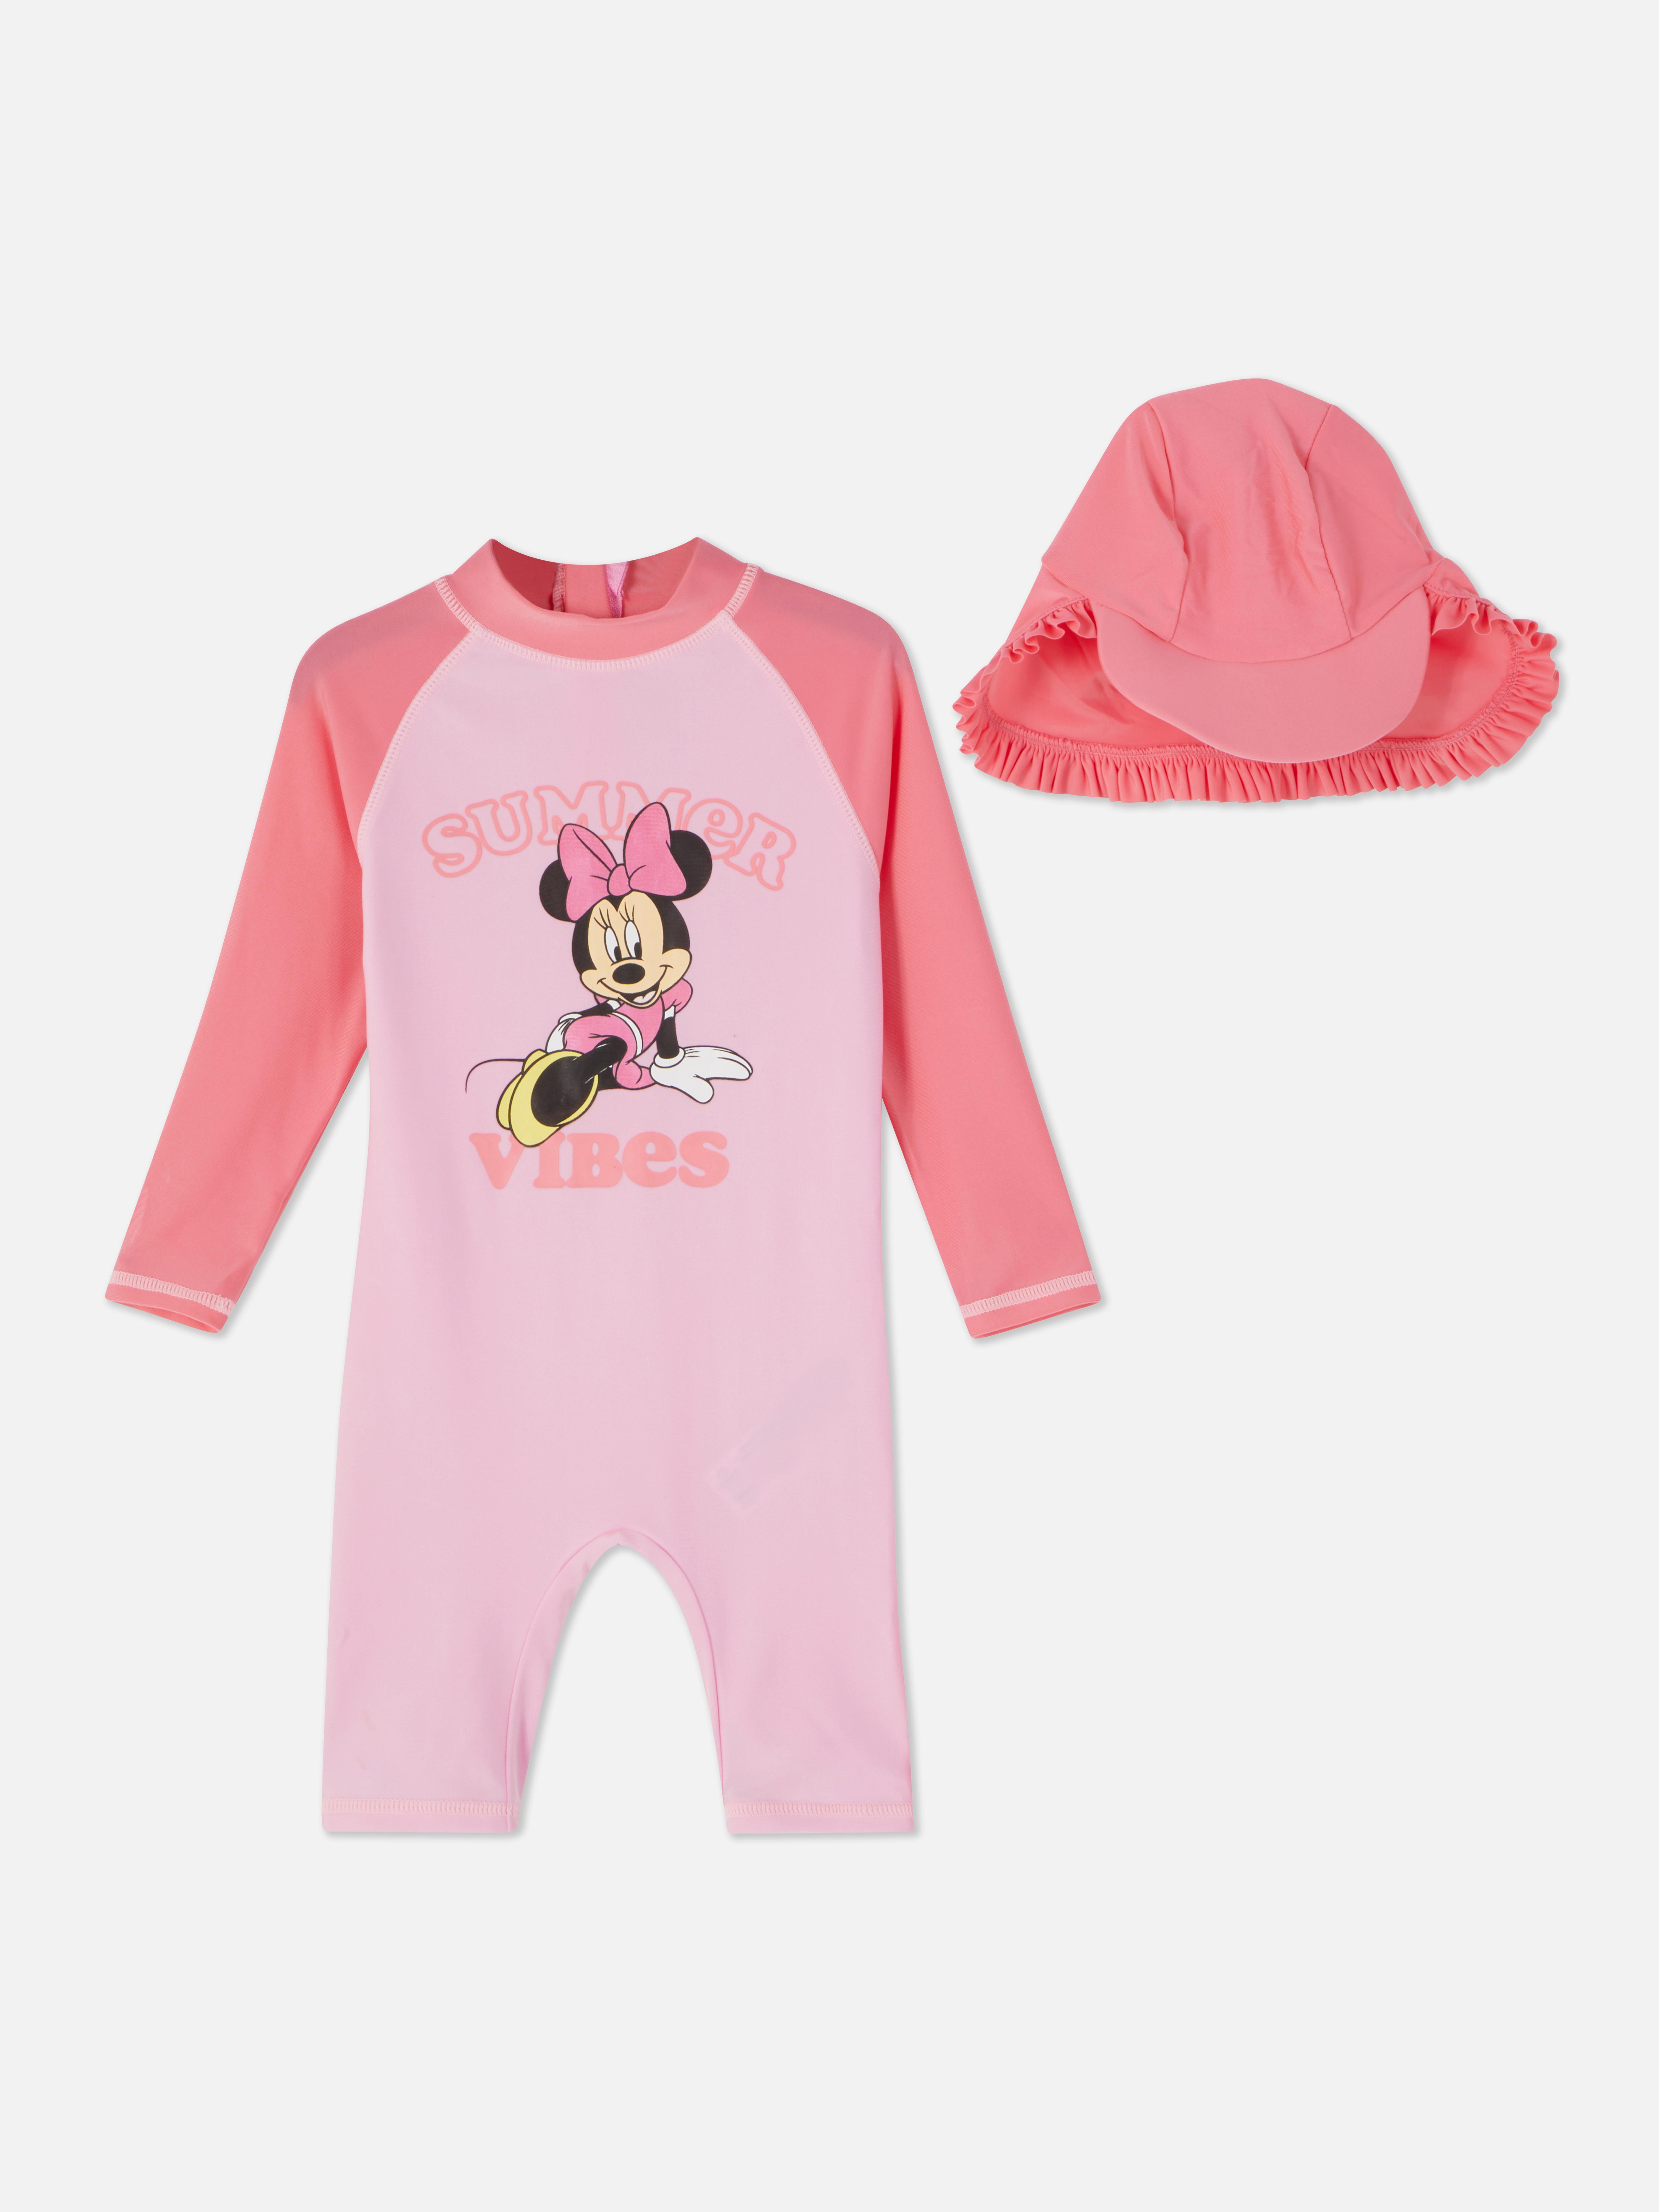 Disney's Minnie Mouse Sunsuit and Hat